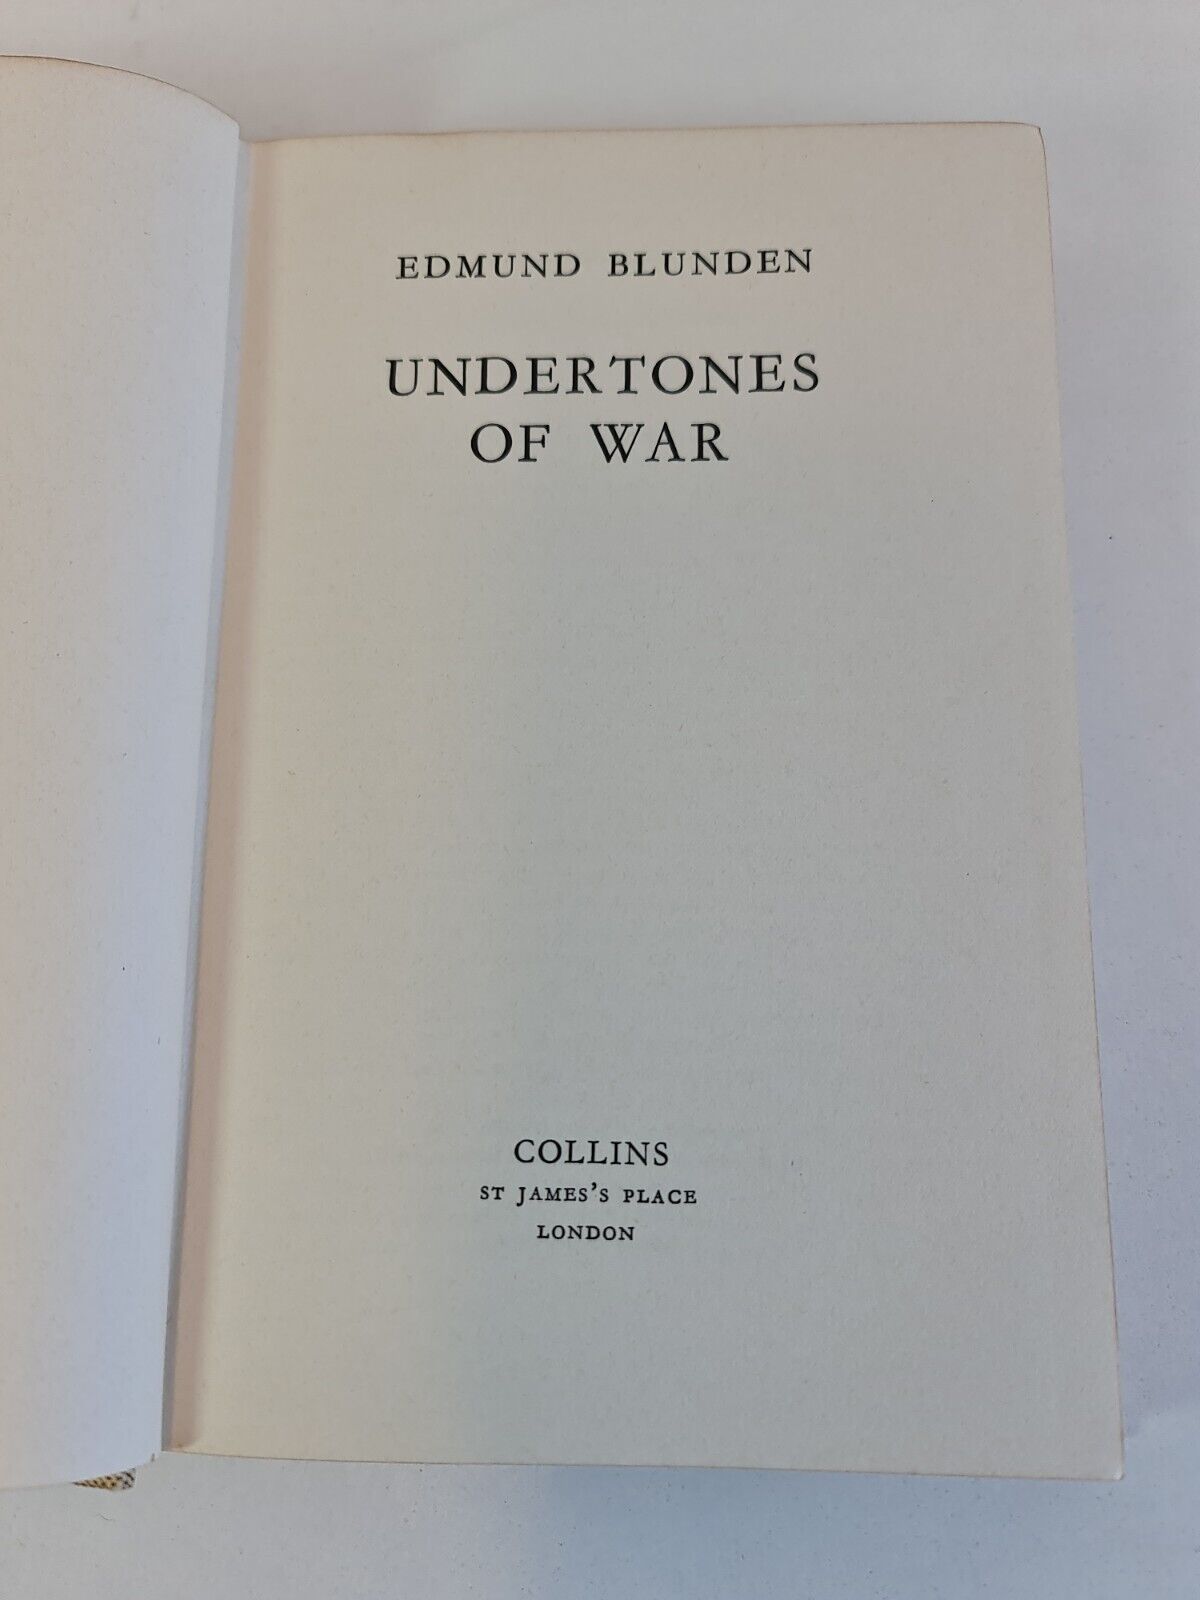 SIGNED Undertones of War by Edmund Blunden (1965)